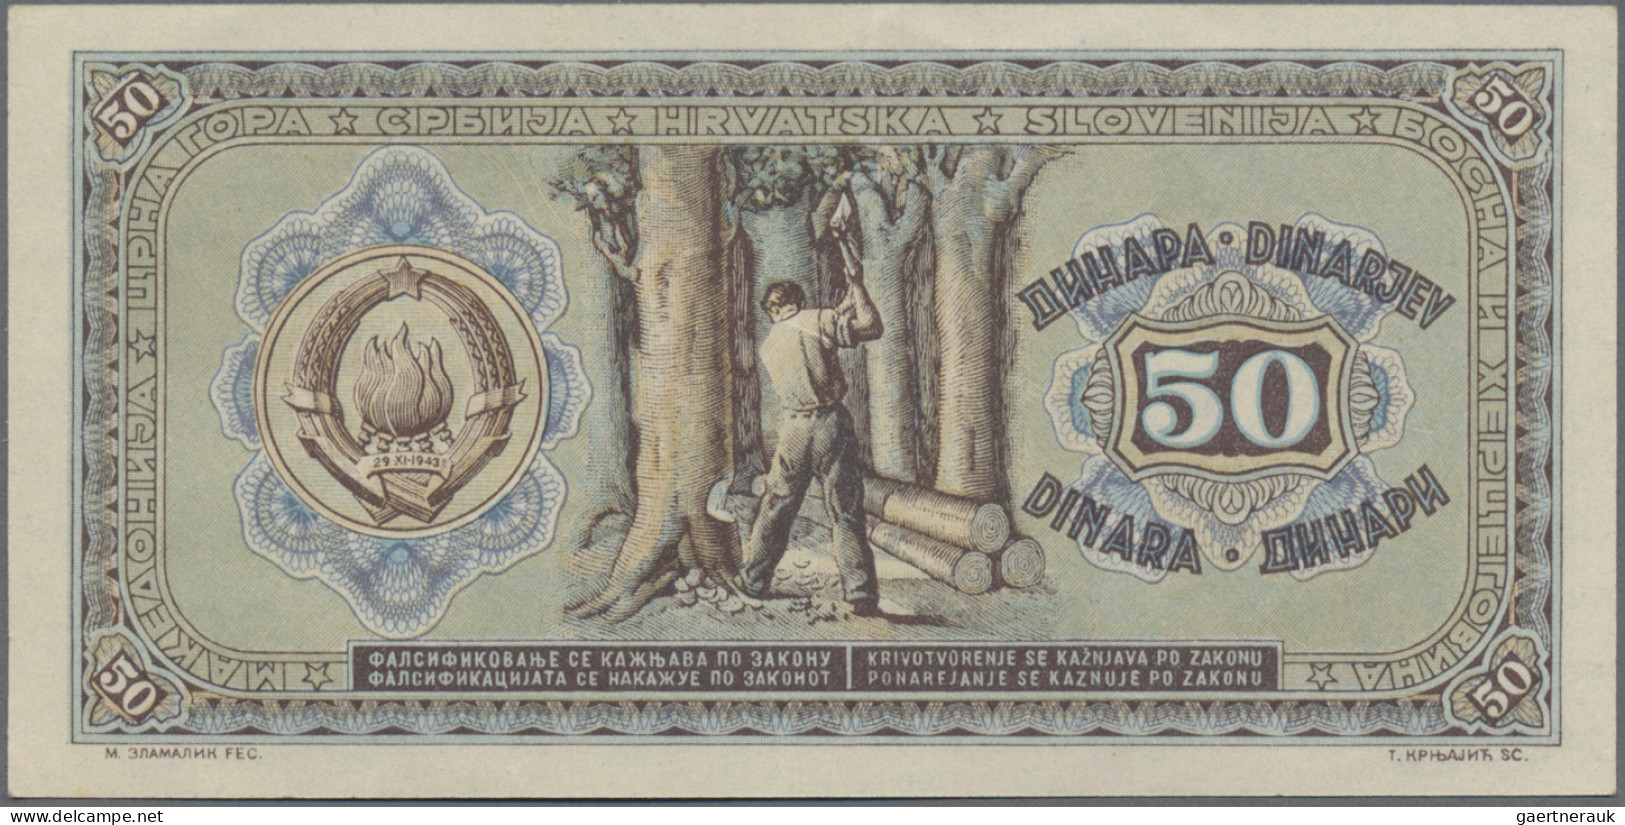 Yugoslavia: Set of 6 notes 50 Dinara 1945, P.64a. Condition: VF to UNC. (6 pcs.)